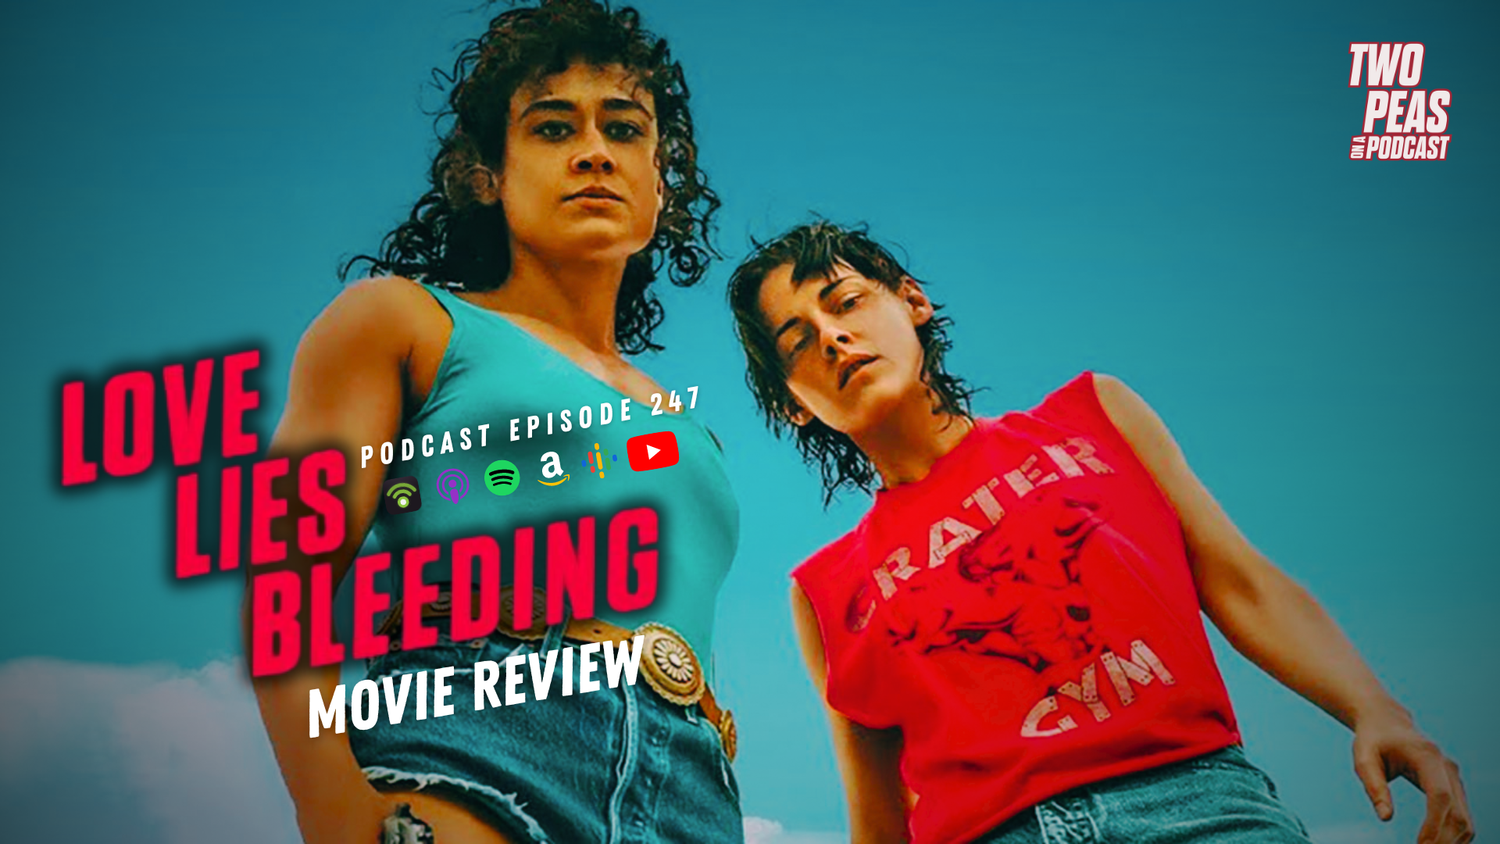 LOVE LIES BLEEDING Movie Review (247)